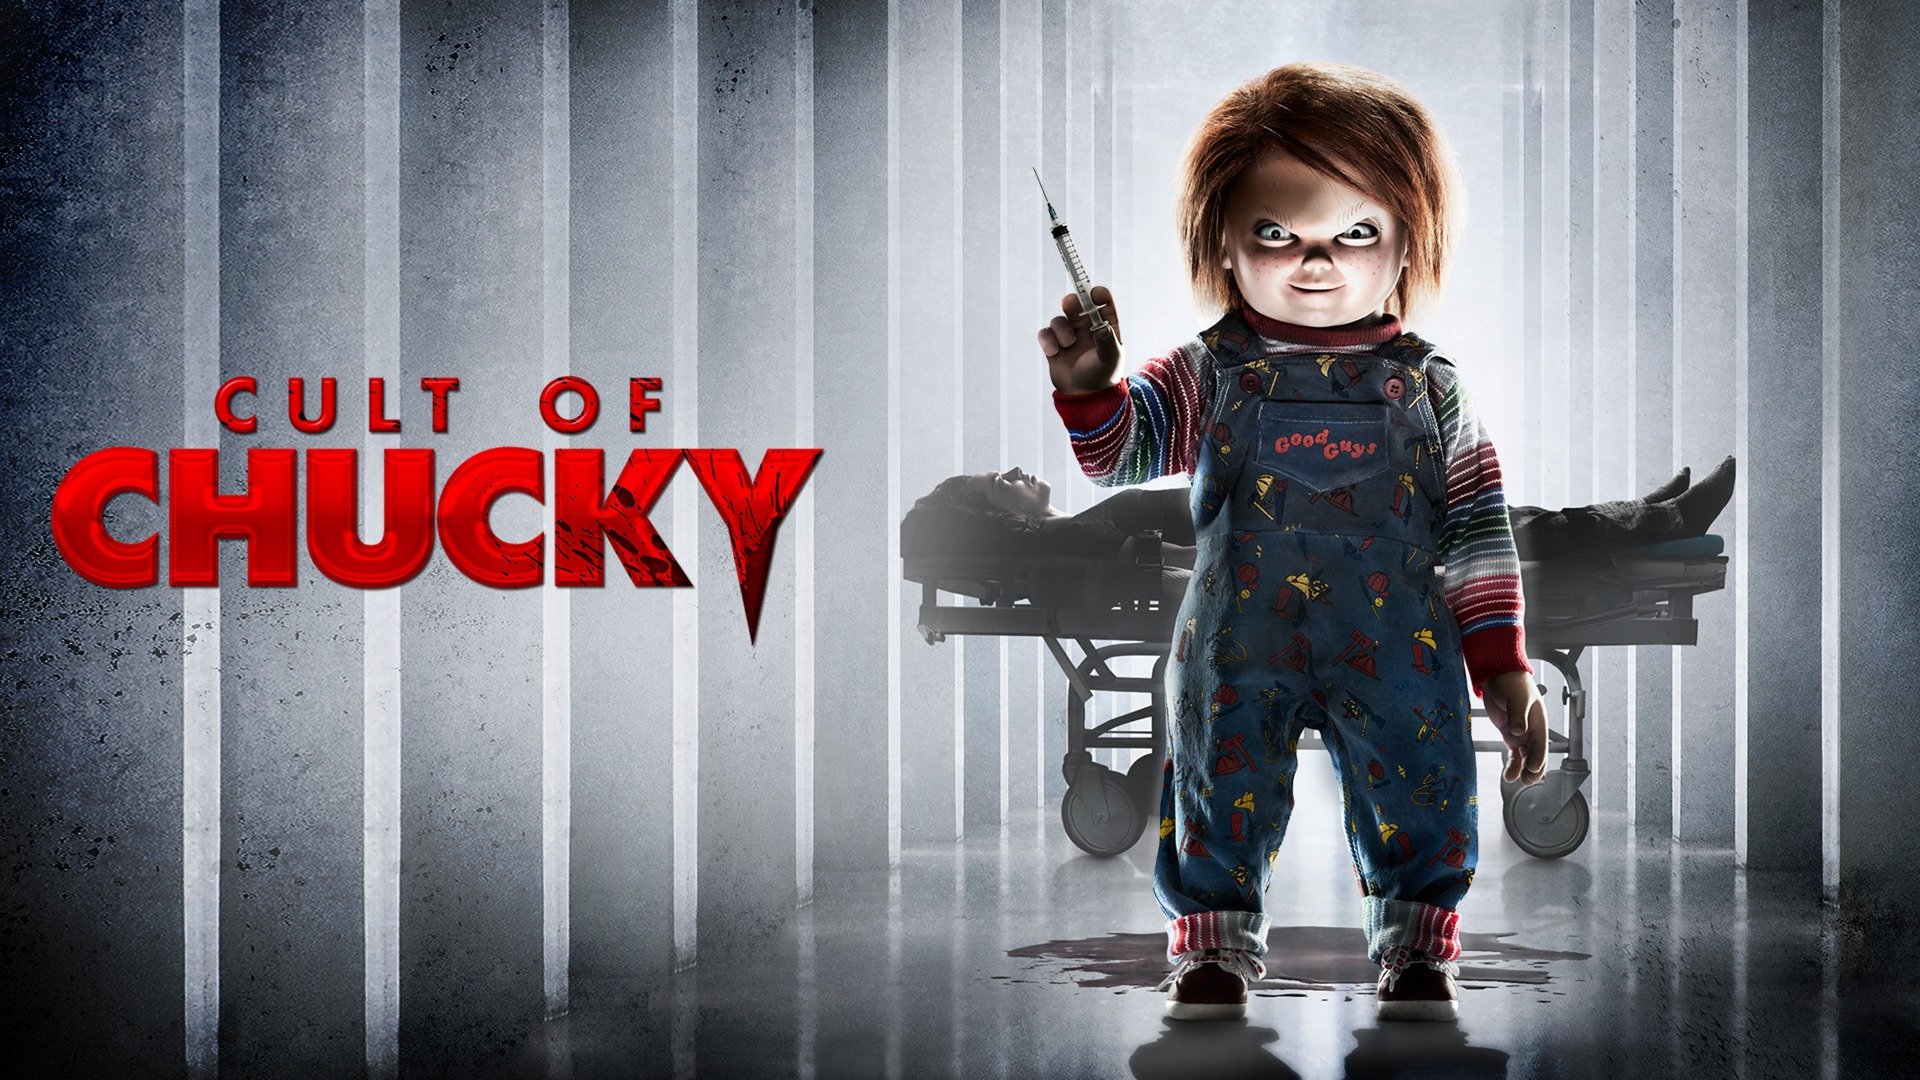 Watch creepy new teaser trailer for 'Chucky' TV series